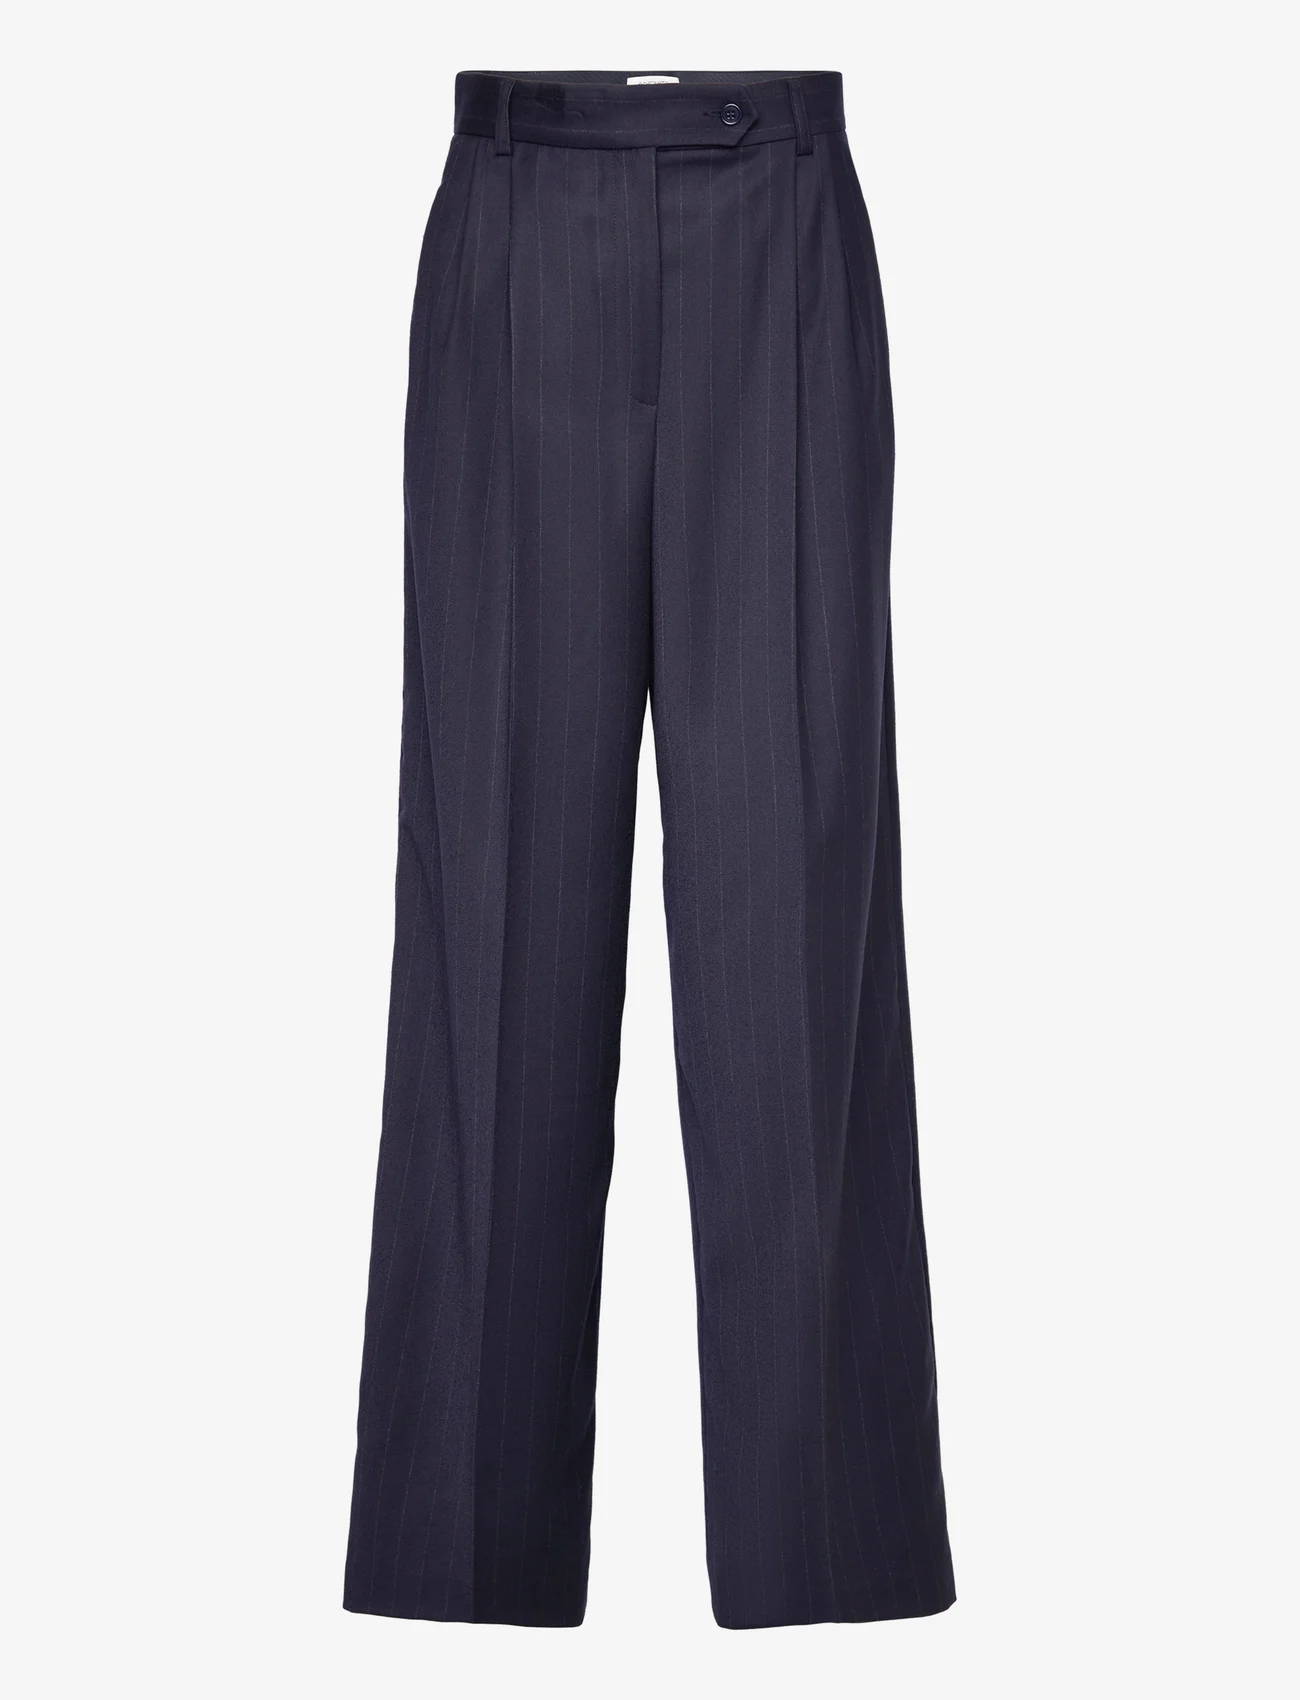 Andiata - Gytta trousers - puvunhousut - navy blue pinstripe - 0